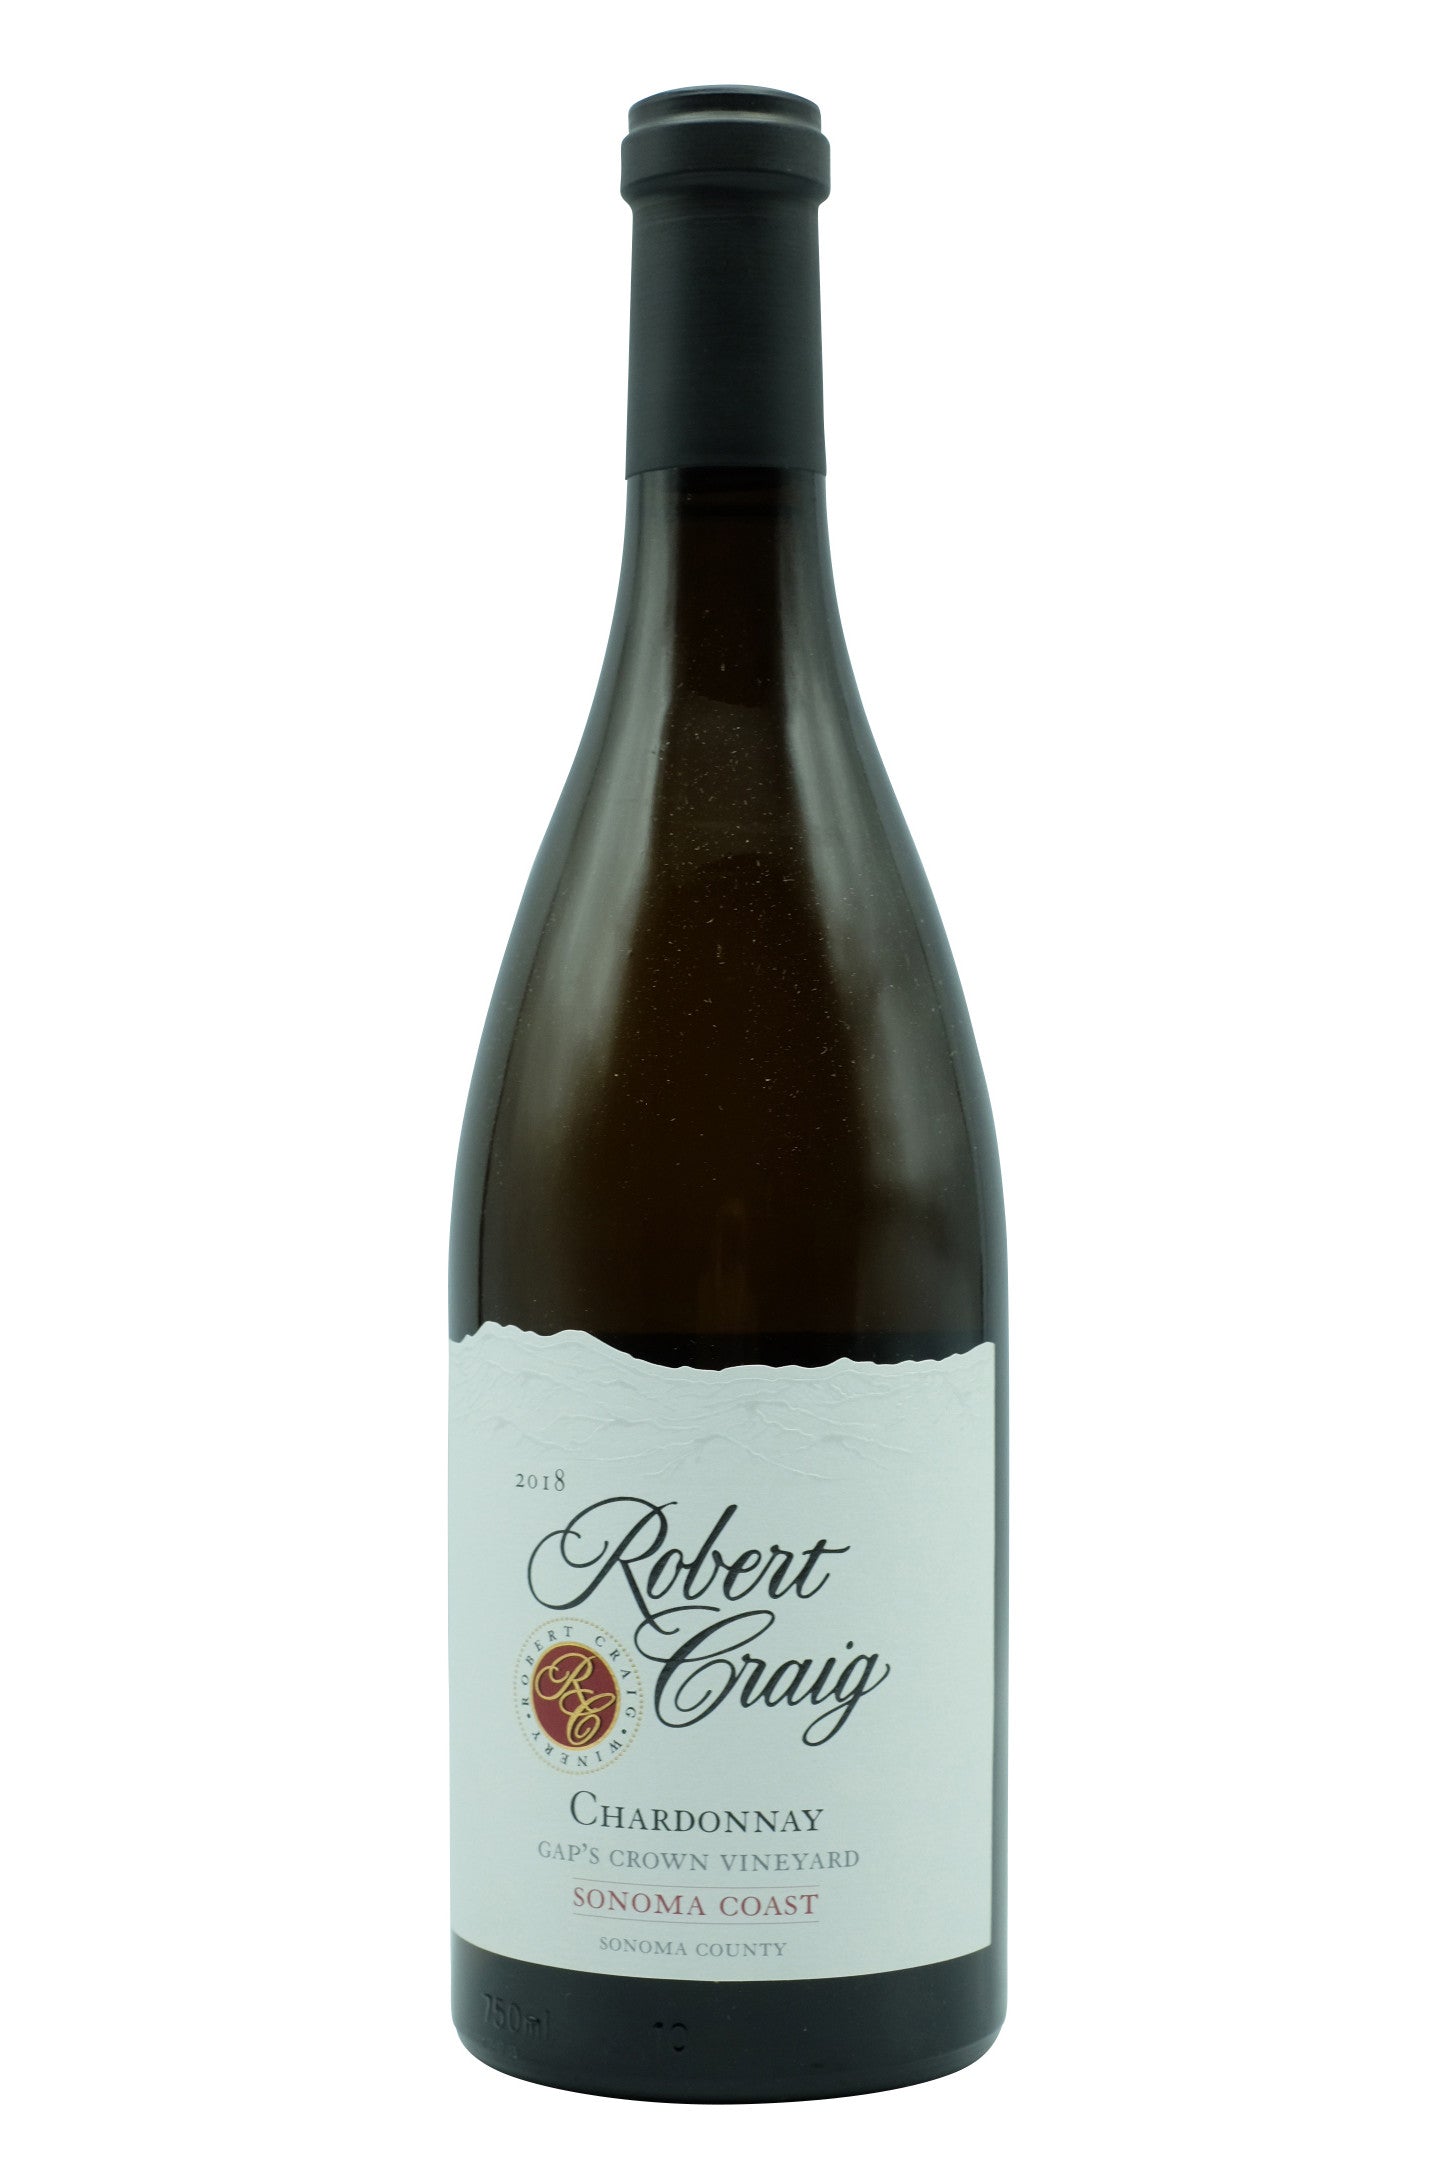 Robert Craig Gap's Crown Chardonnay